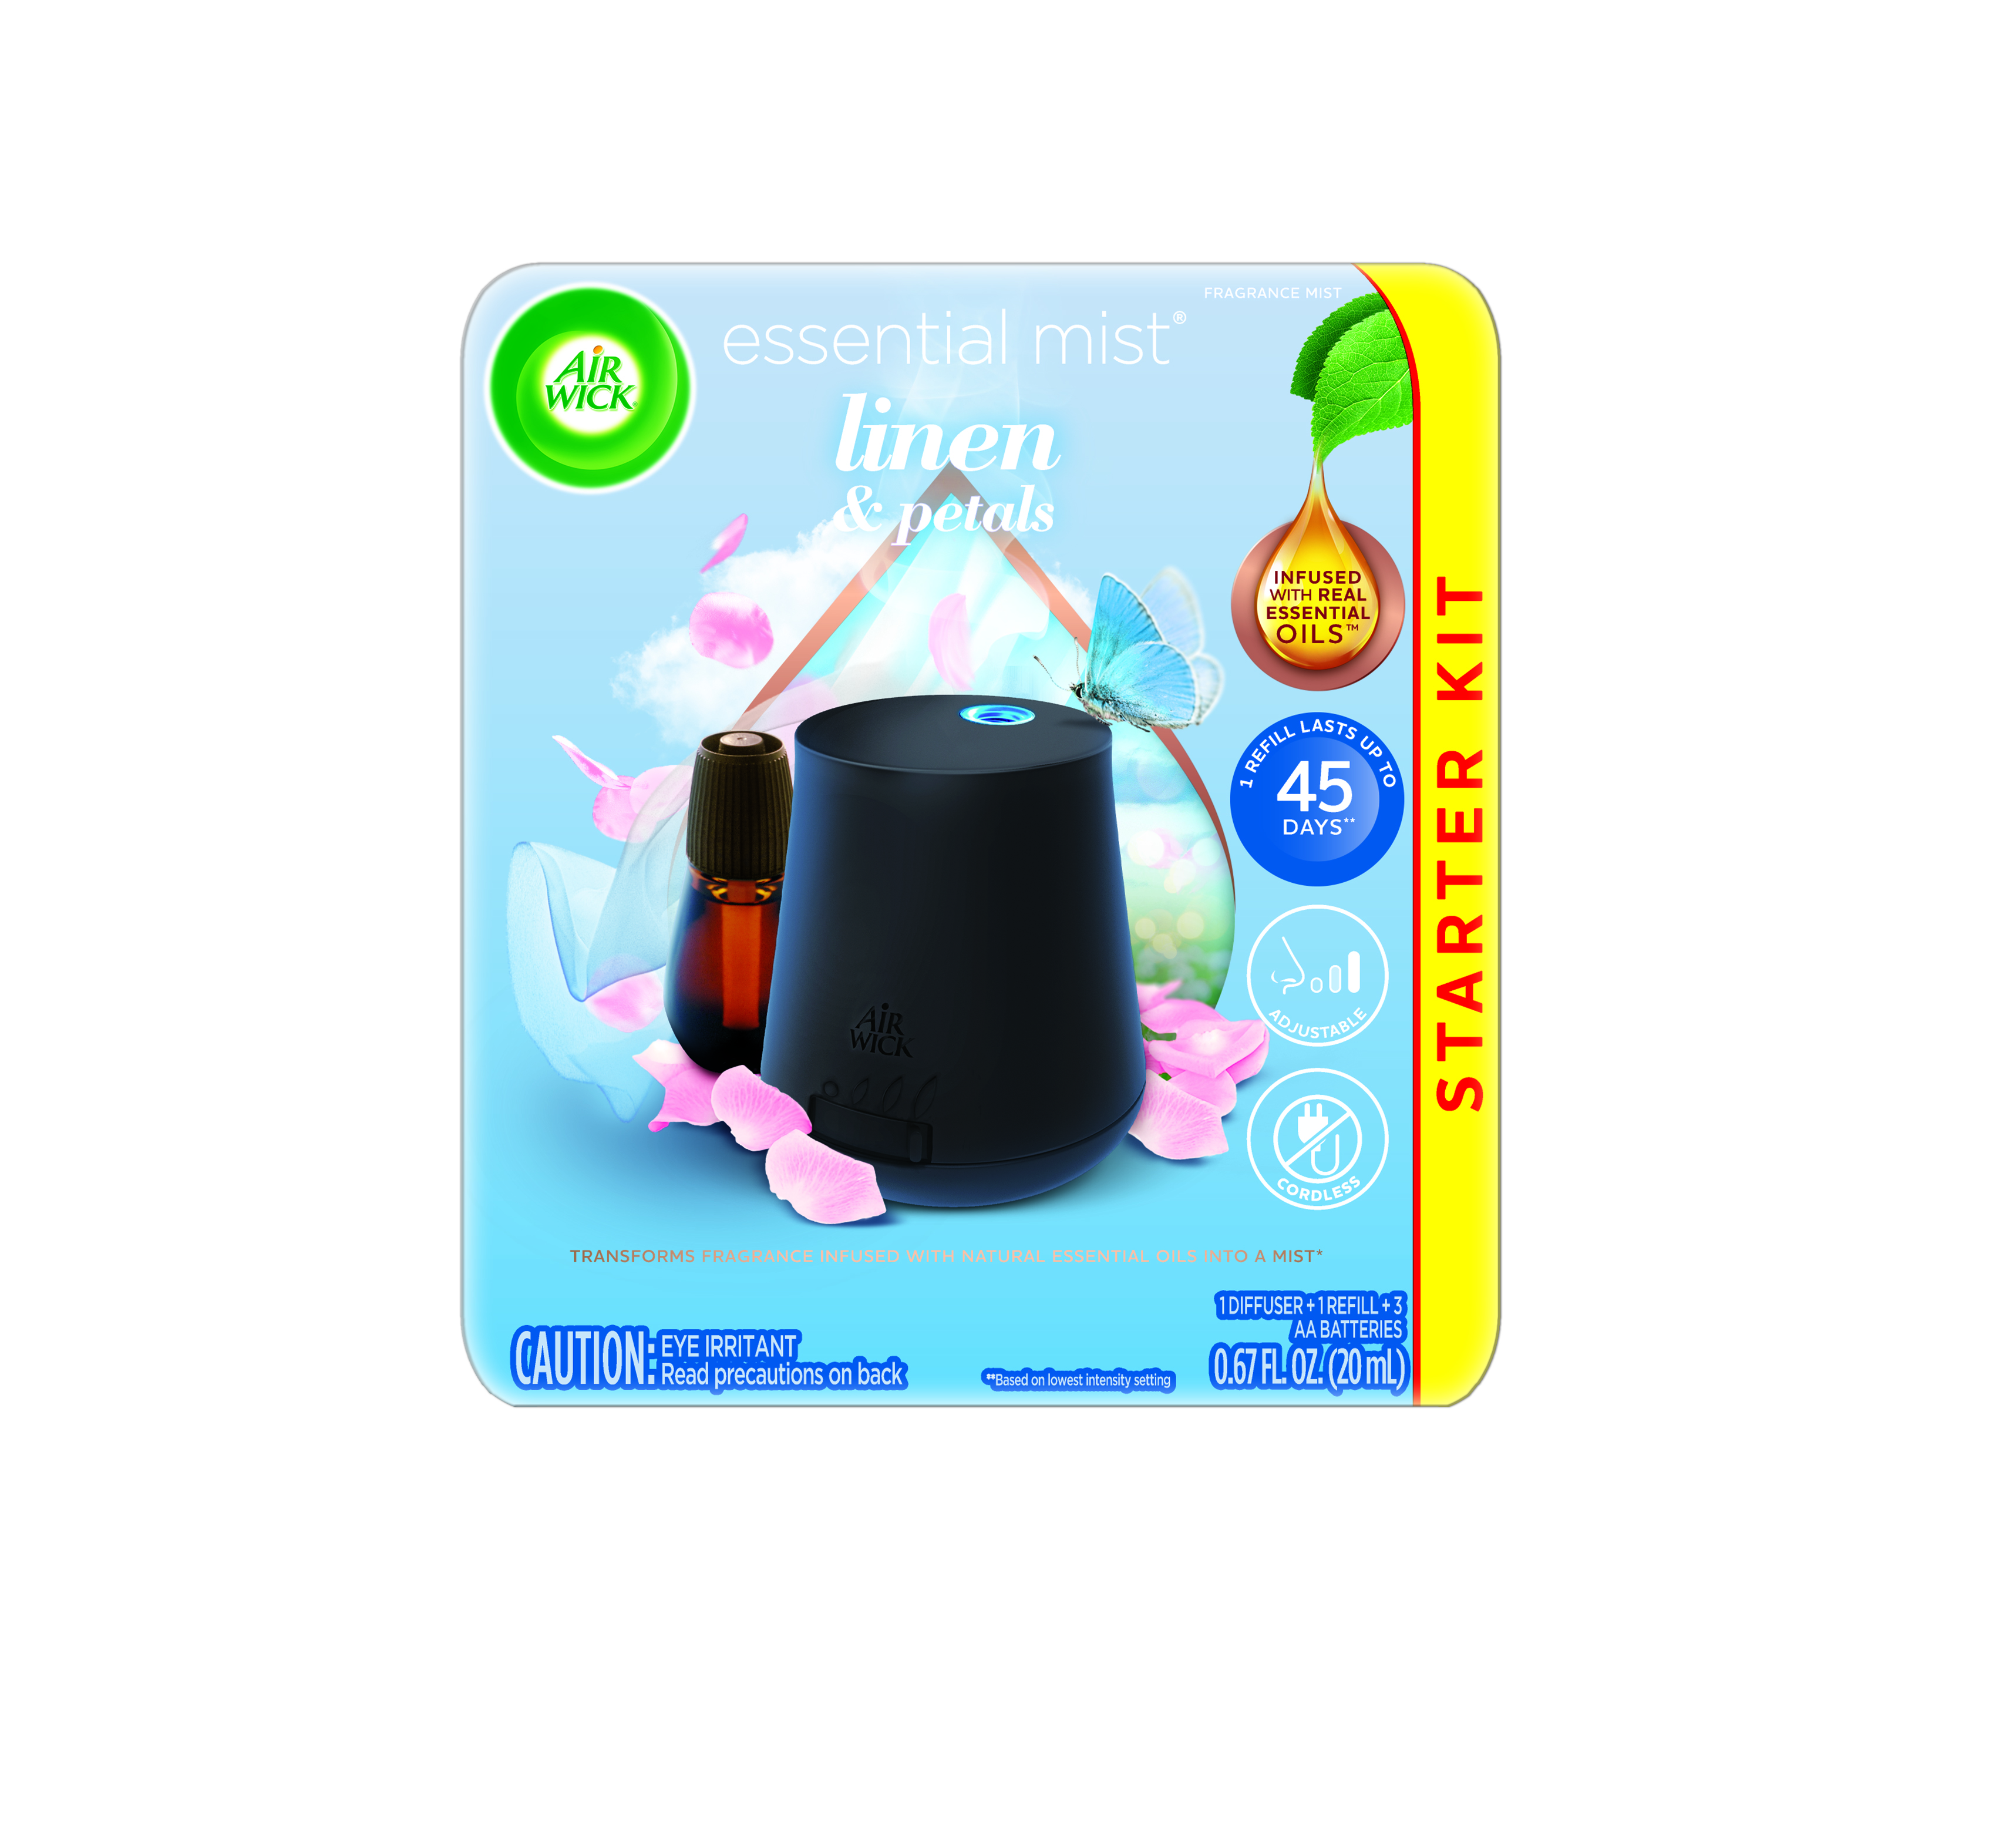 AIR WICK® Essential Mist - Linen & Petals - Kit